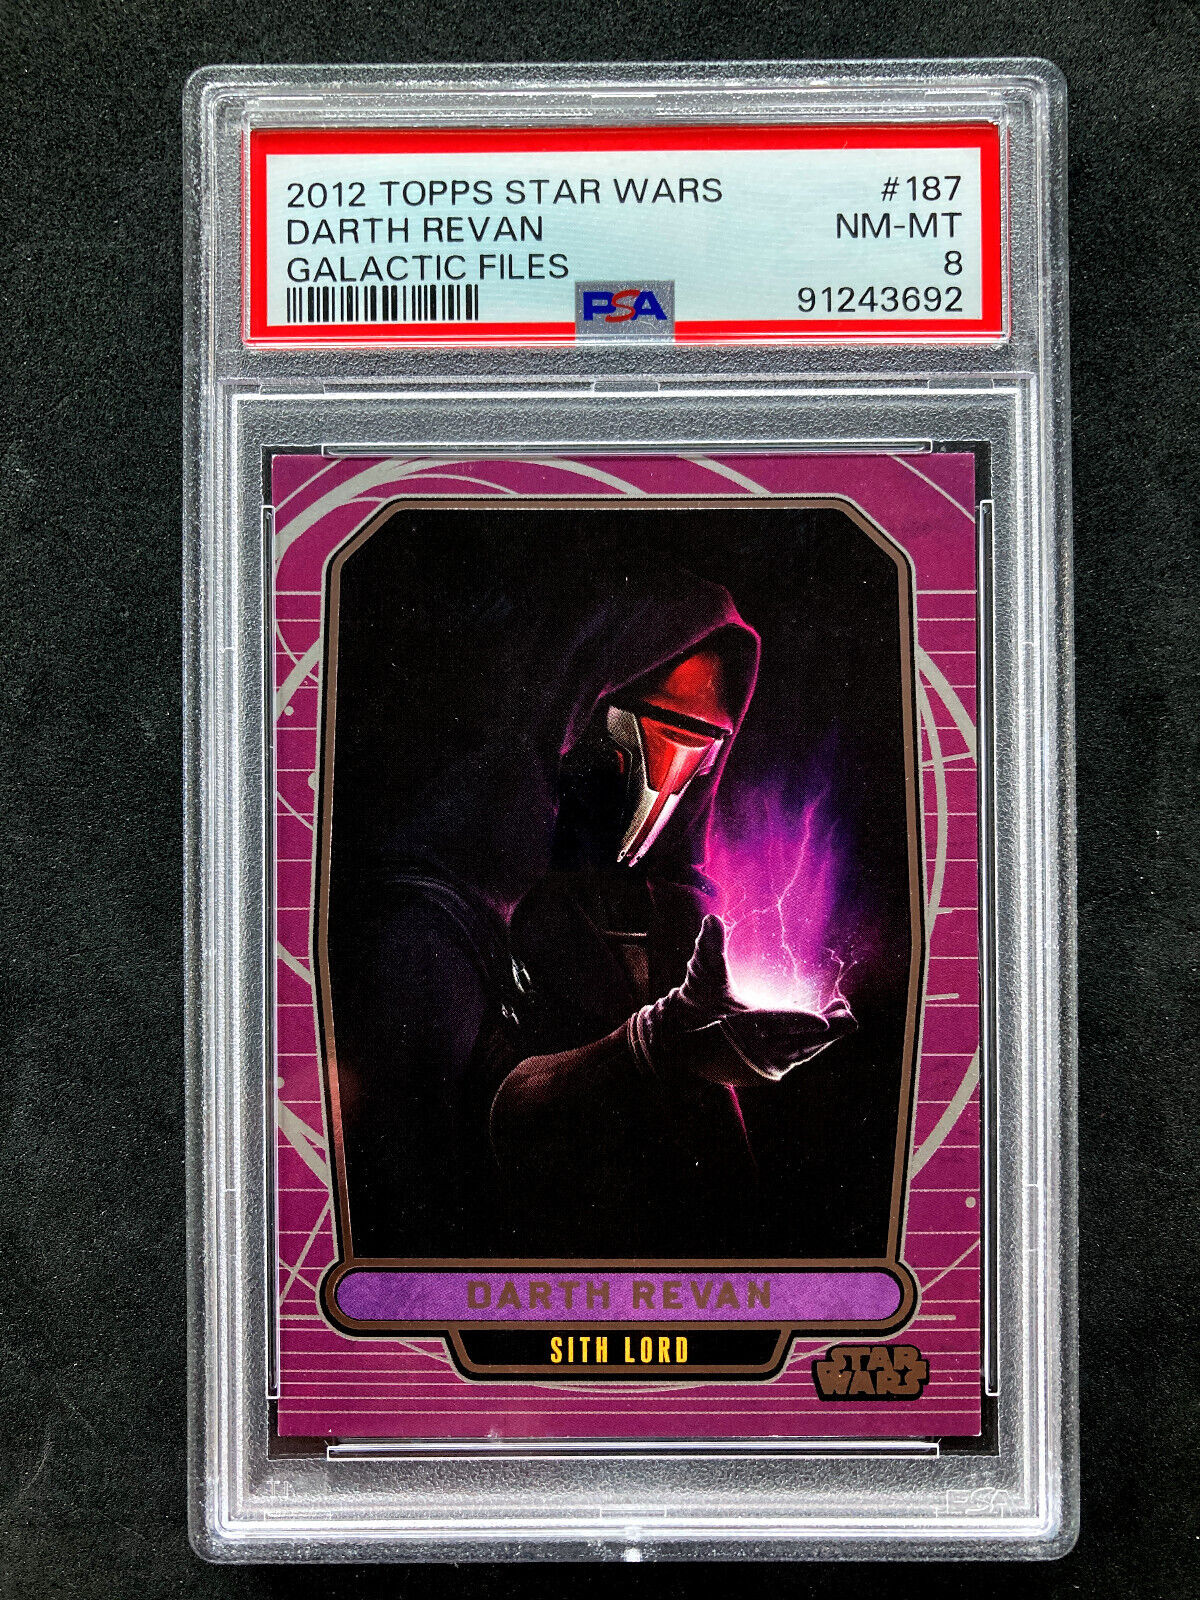 PSA 8 Darth Revan 187 2012 Topps Star Wars Galactic Files Card KOTOR